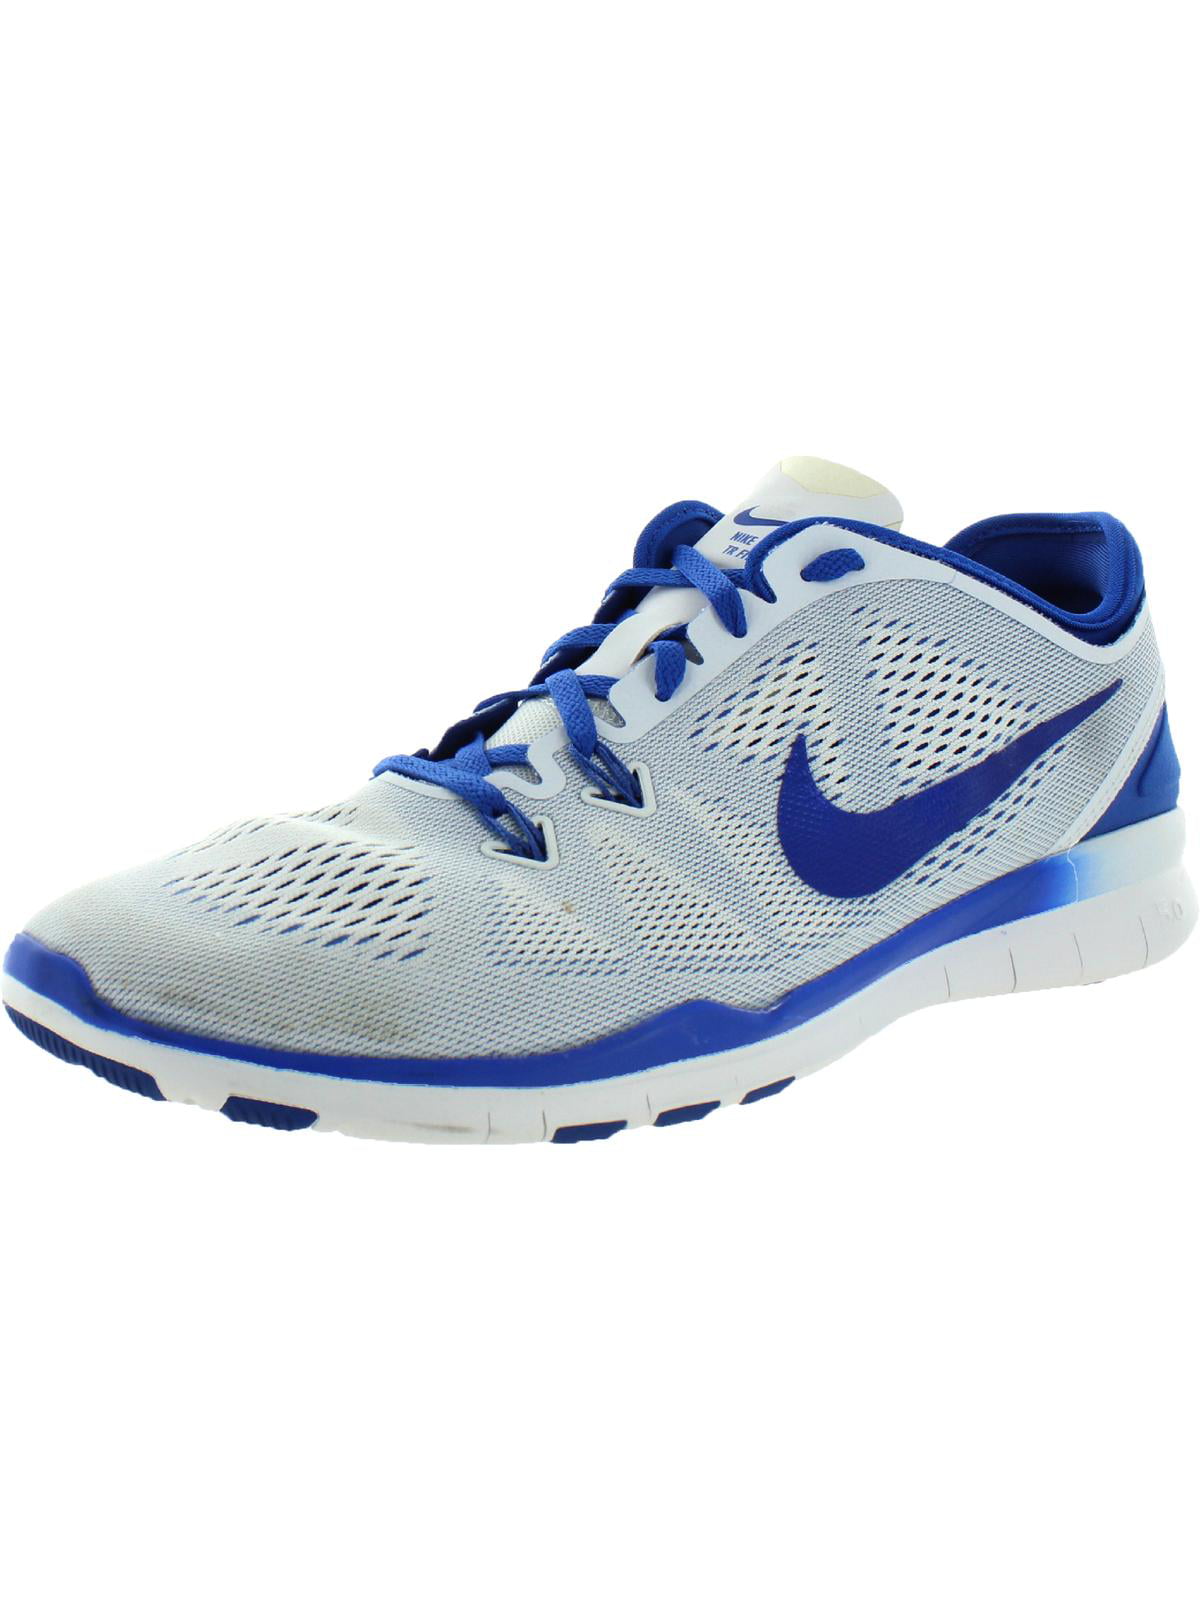 Nike Nike Womens Free 5 0 Tr Fit 5 Running Cross Training Shoes Blue